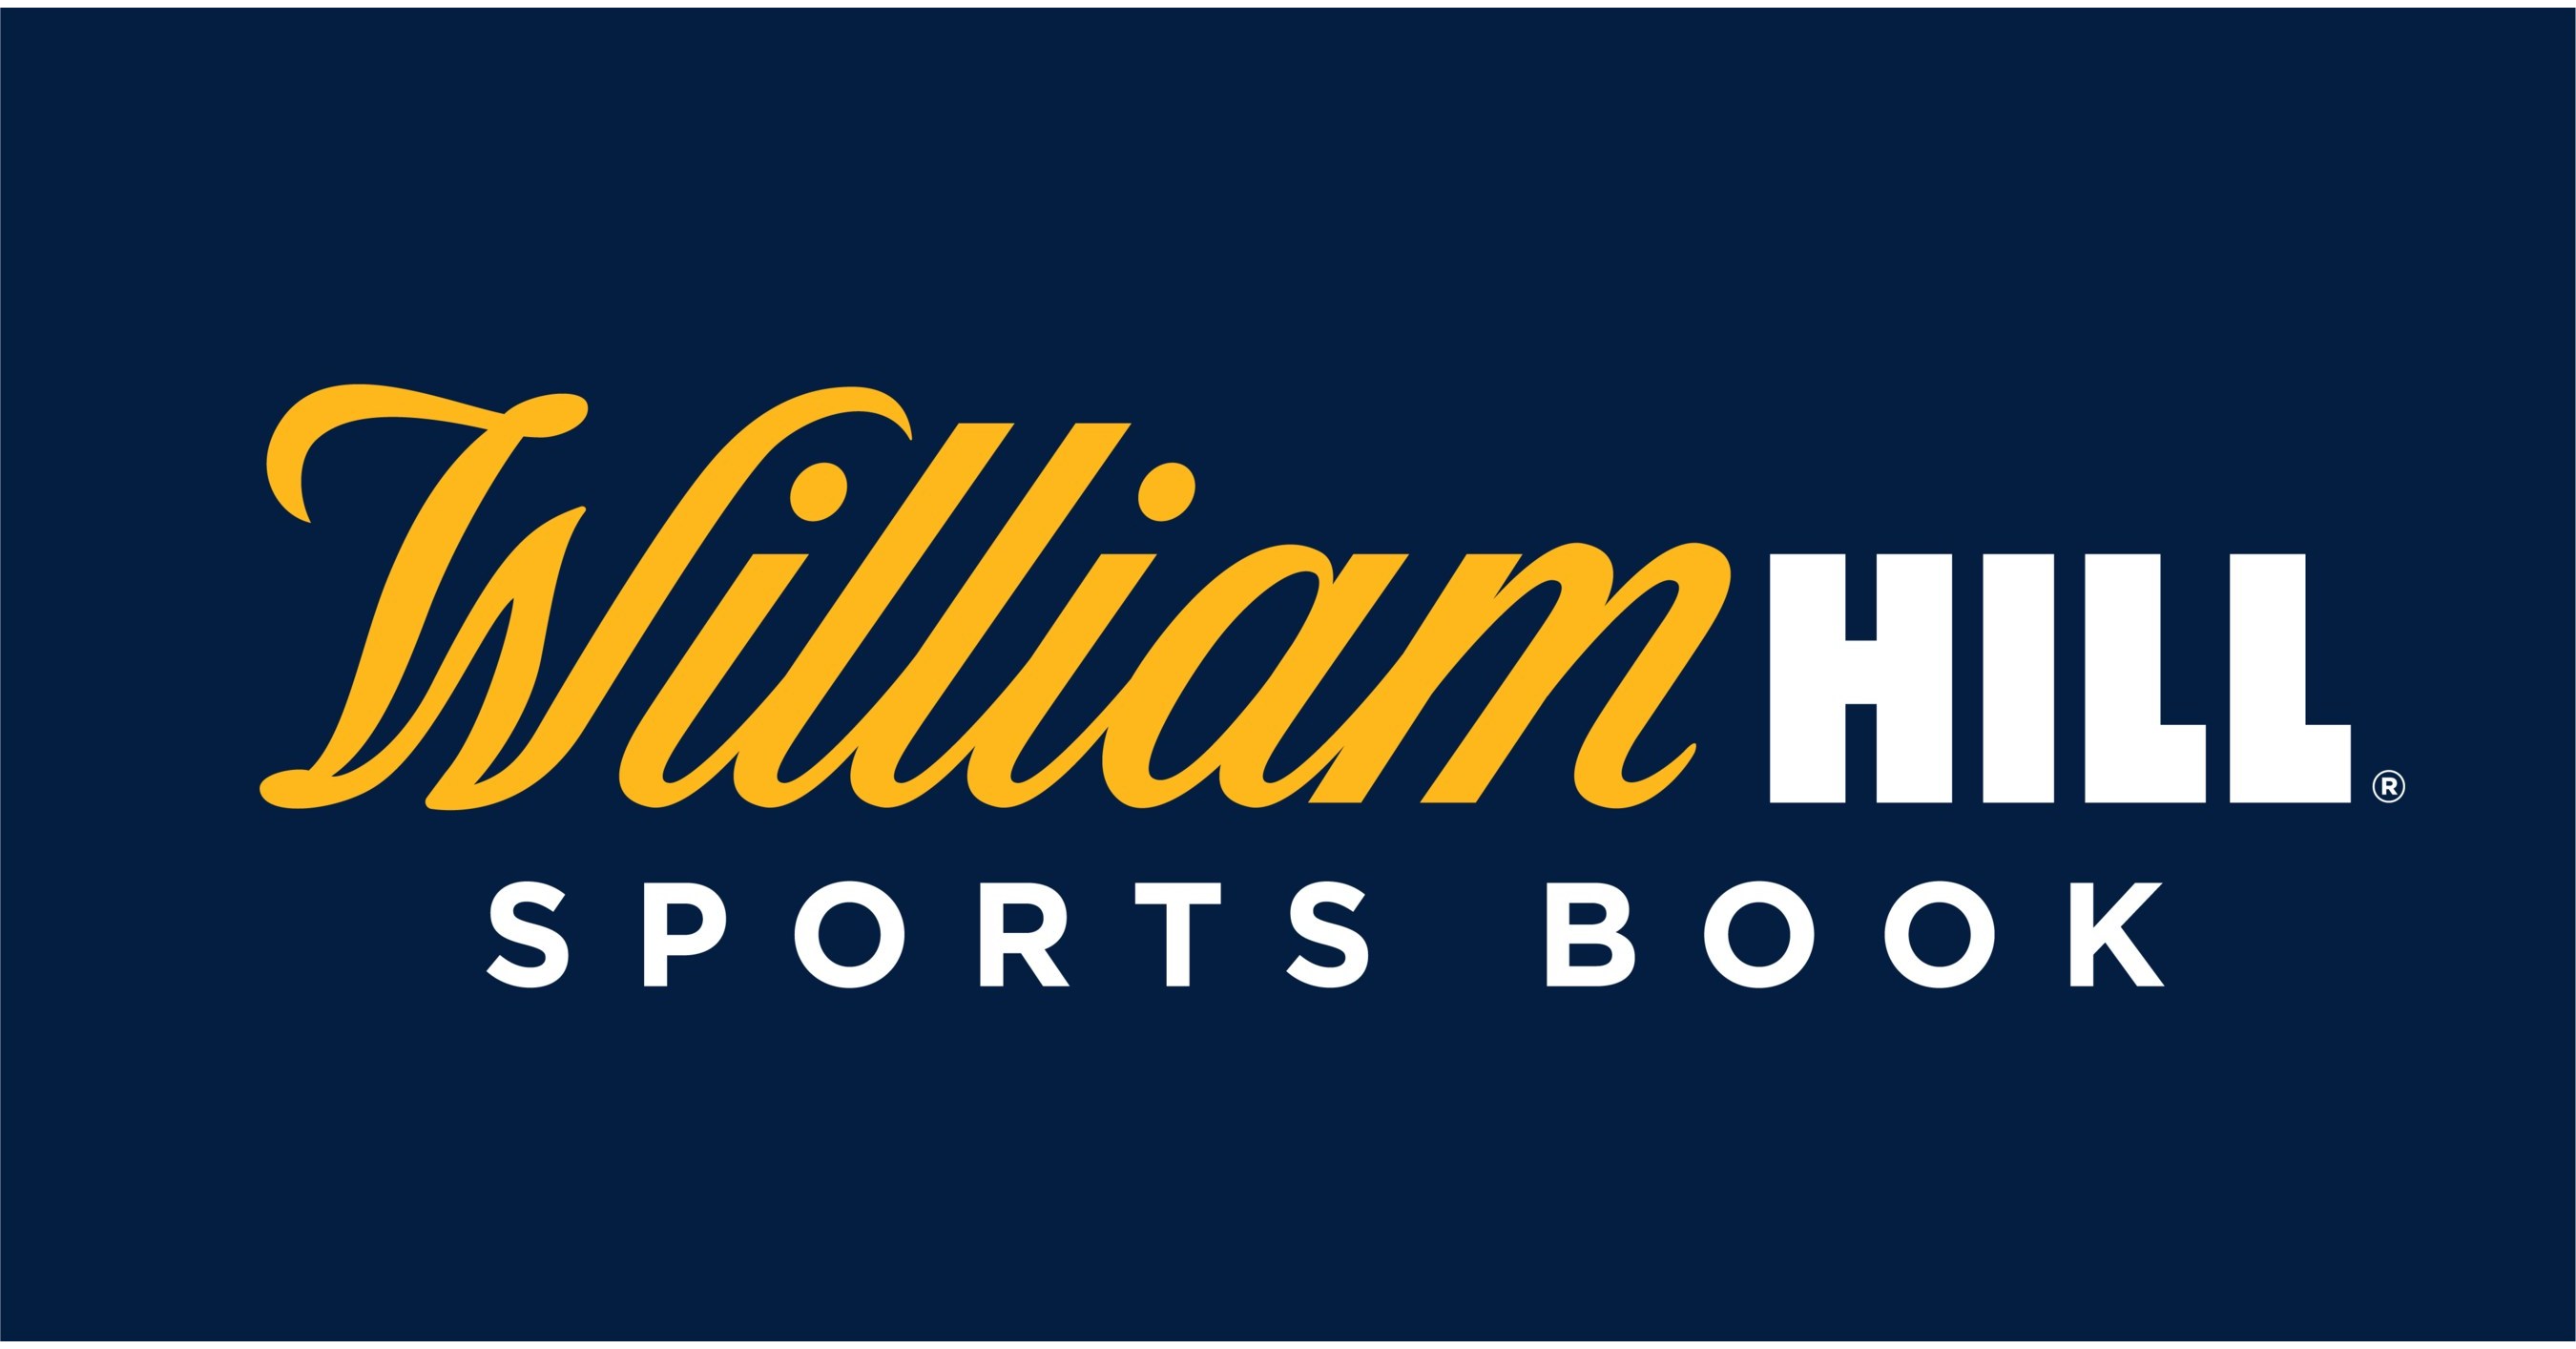 Sports william hill betting bet ufc gambling odds